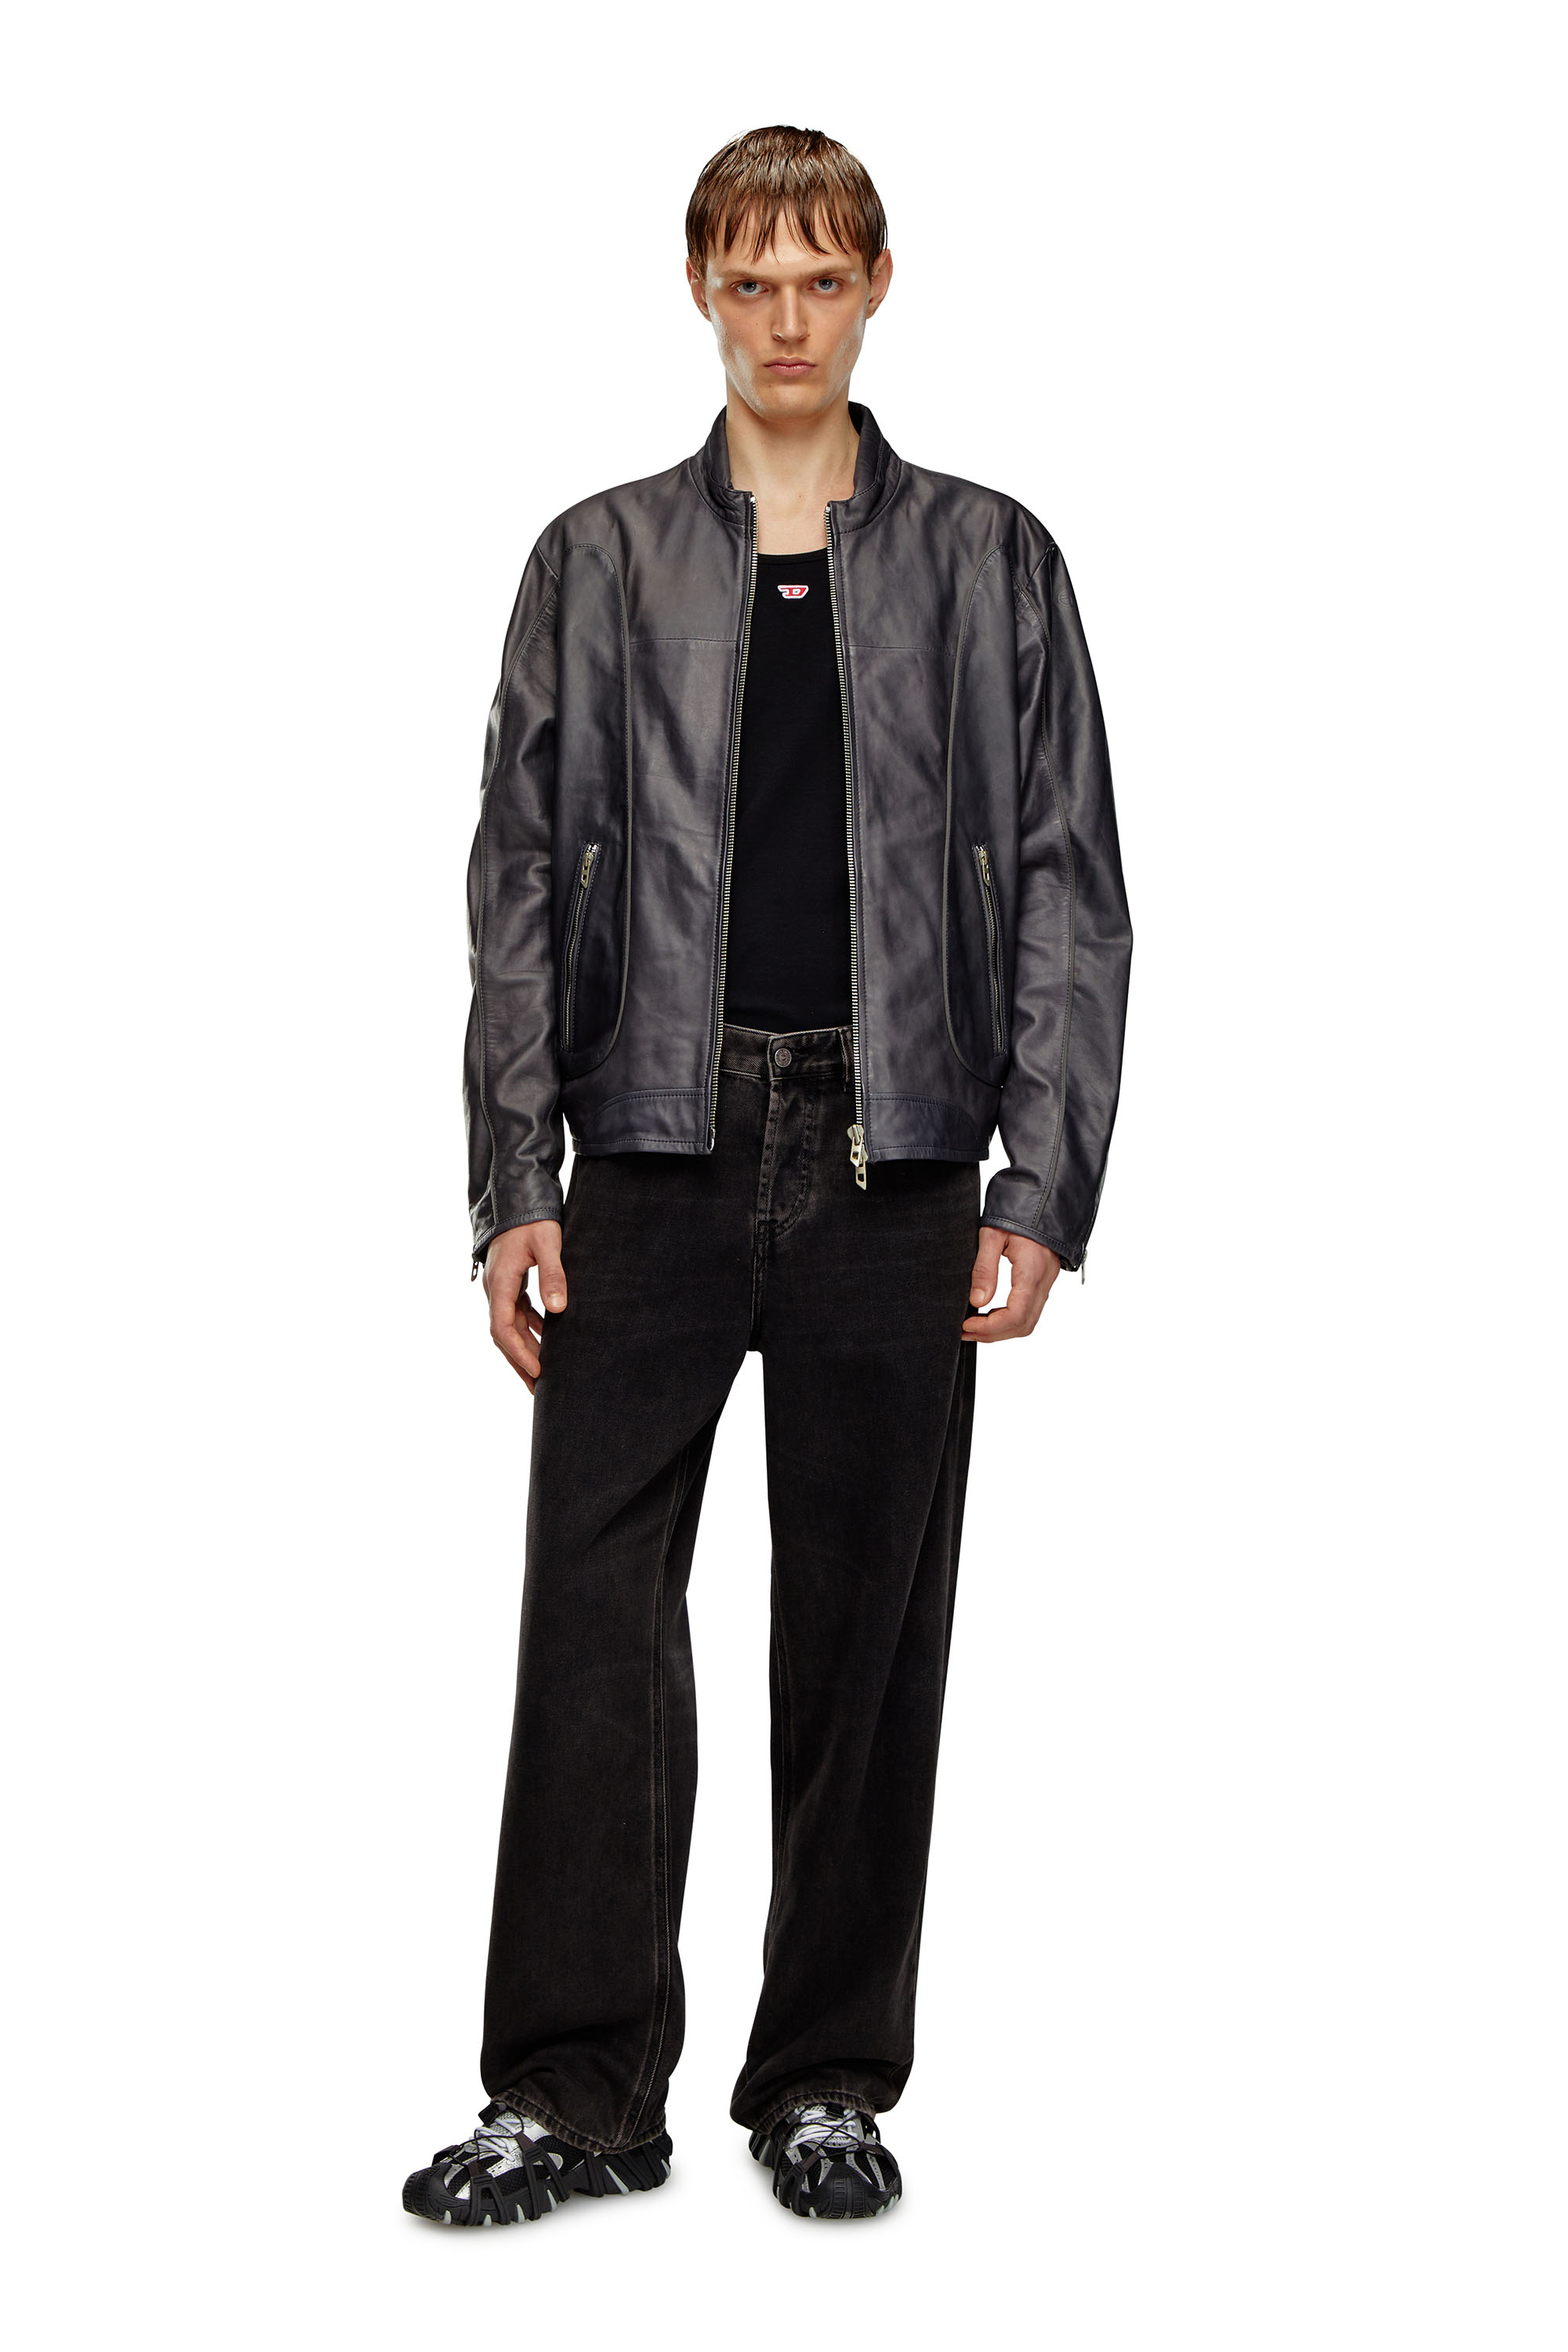 Men's jackets: denim, leather, nylon, winter | Diesel®